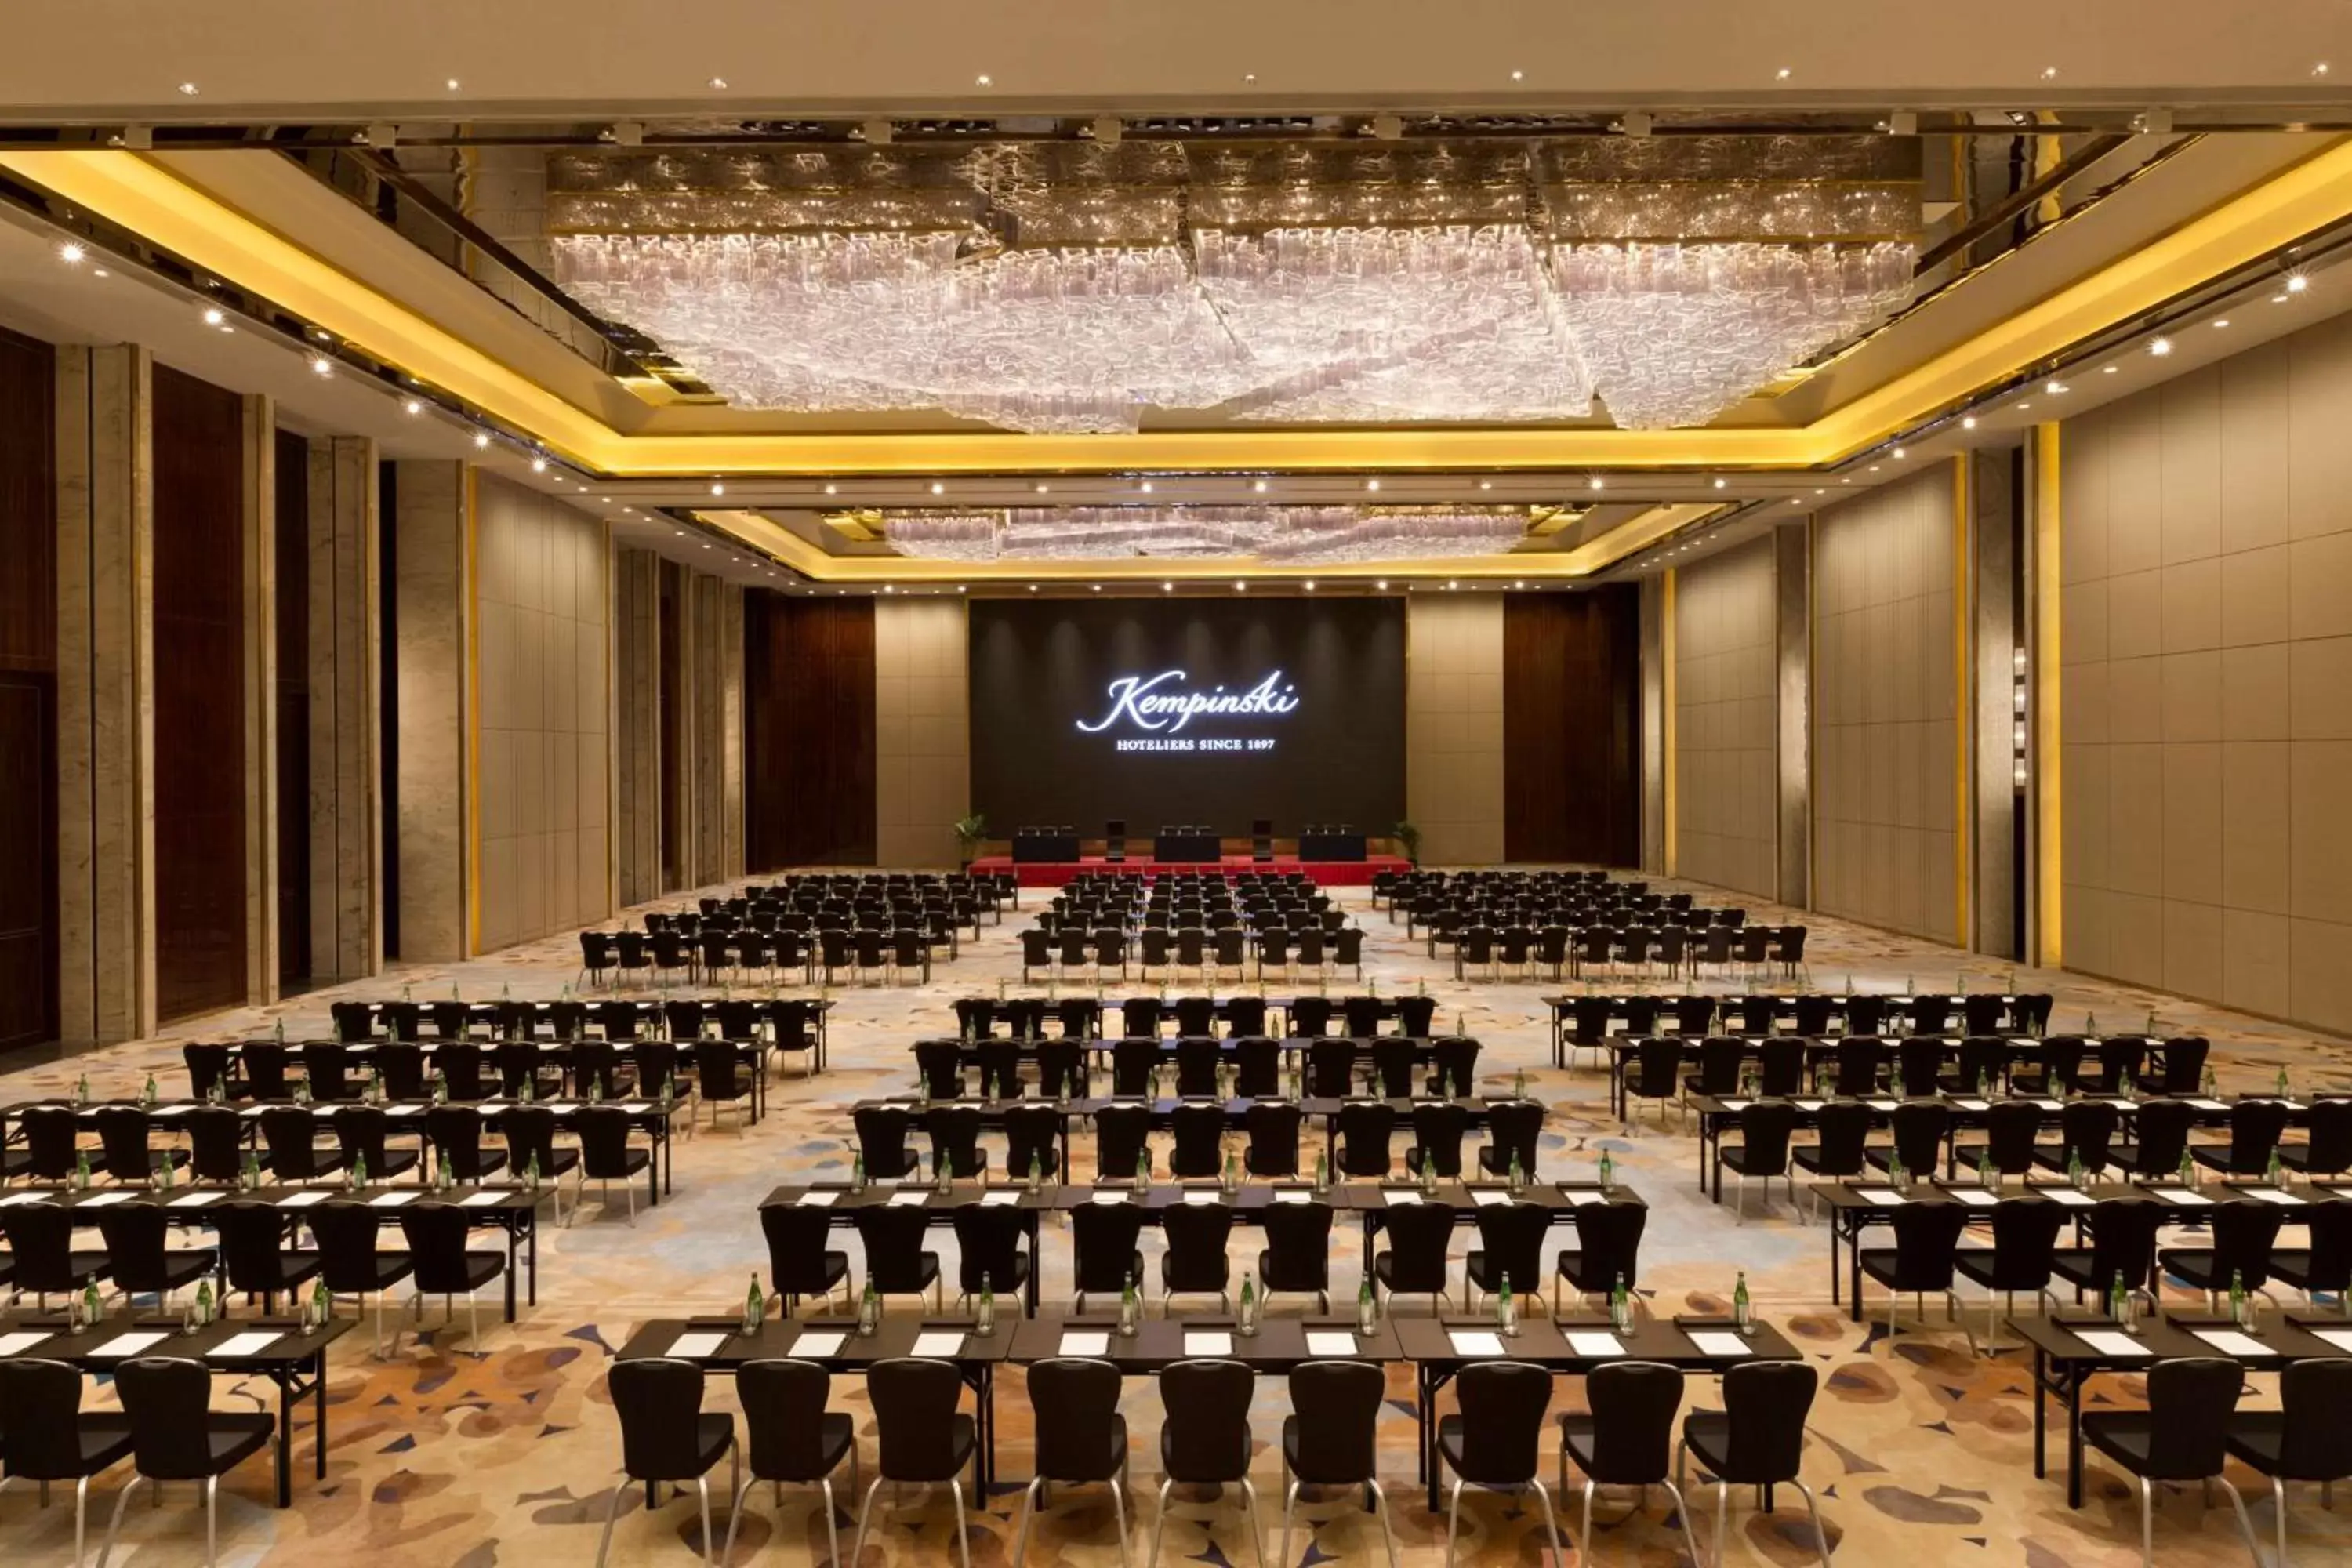 Banquet/Function facilities in Kempinski Hotel Fuzhou